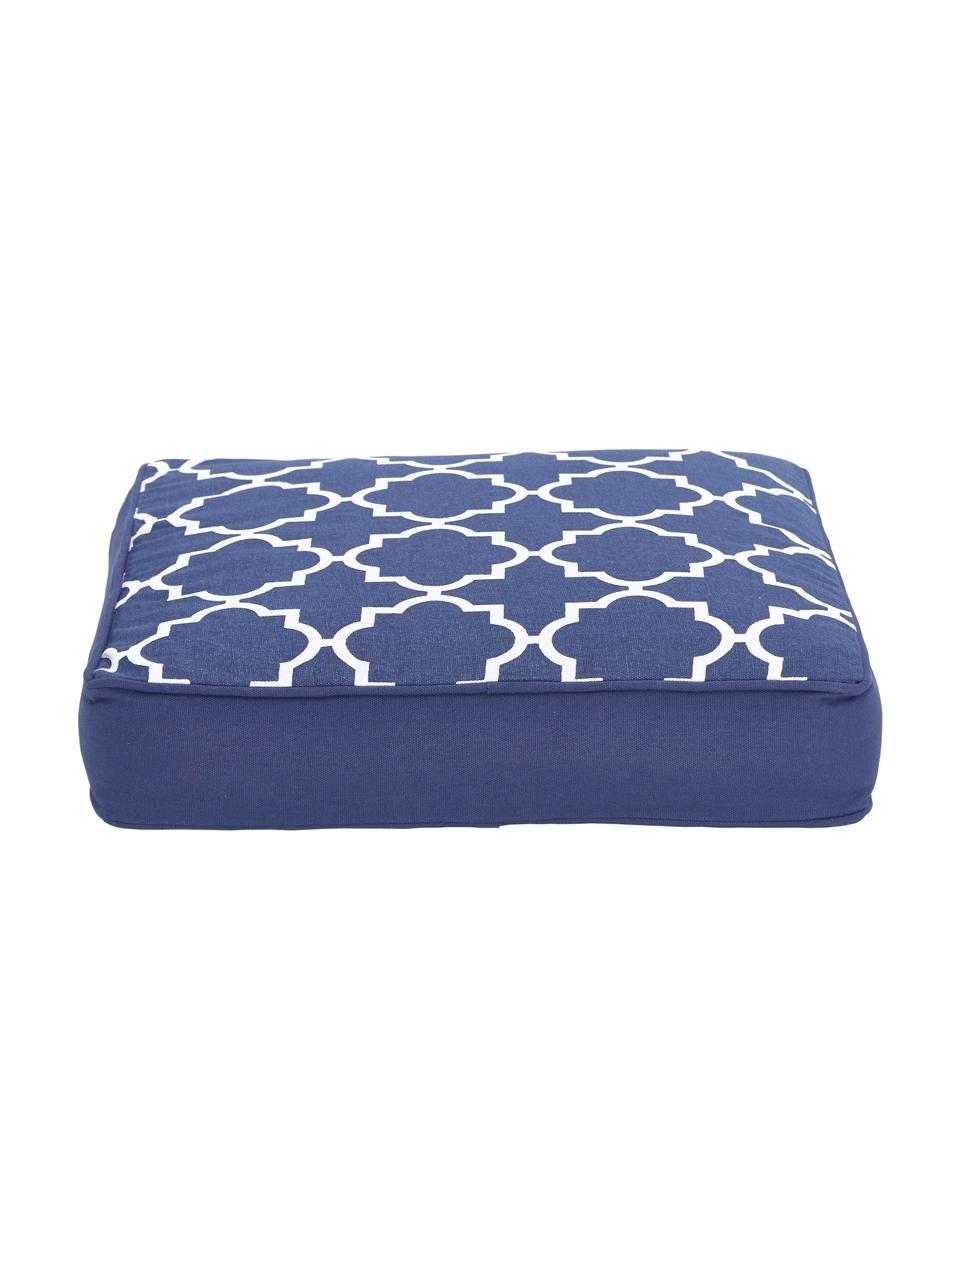 Cojín de asiento alto Lana, Funda: 100% algodón, Azul, An 40 x L 40 cm